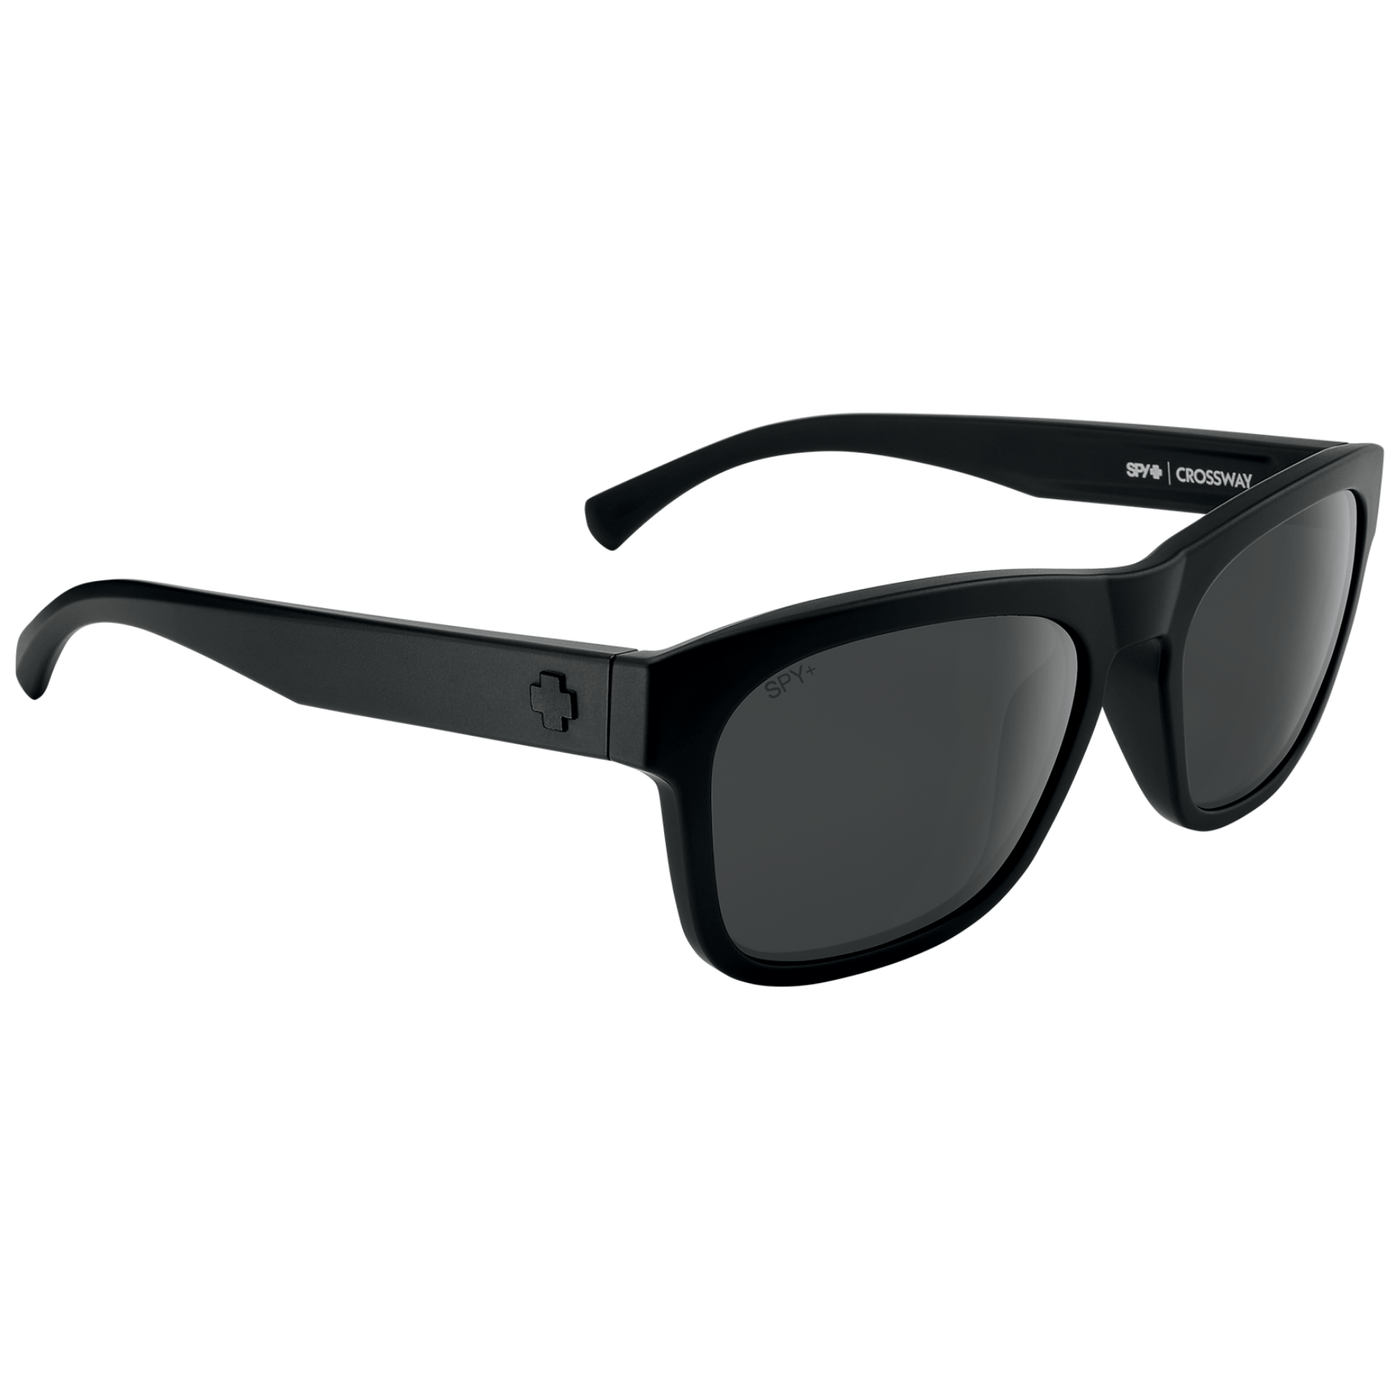 SPY CROSSWAY Sunglasses - Gray/Matte Black 8Lines Shop - Fast Shipping